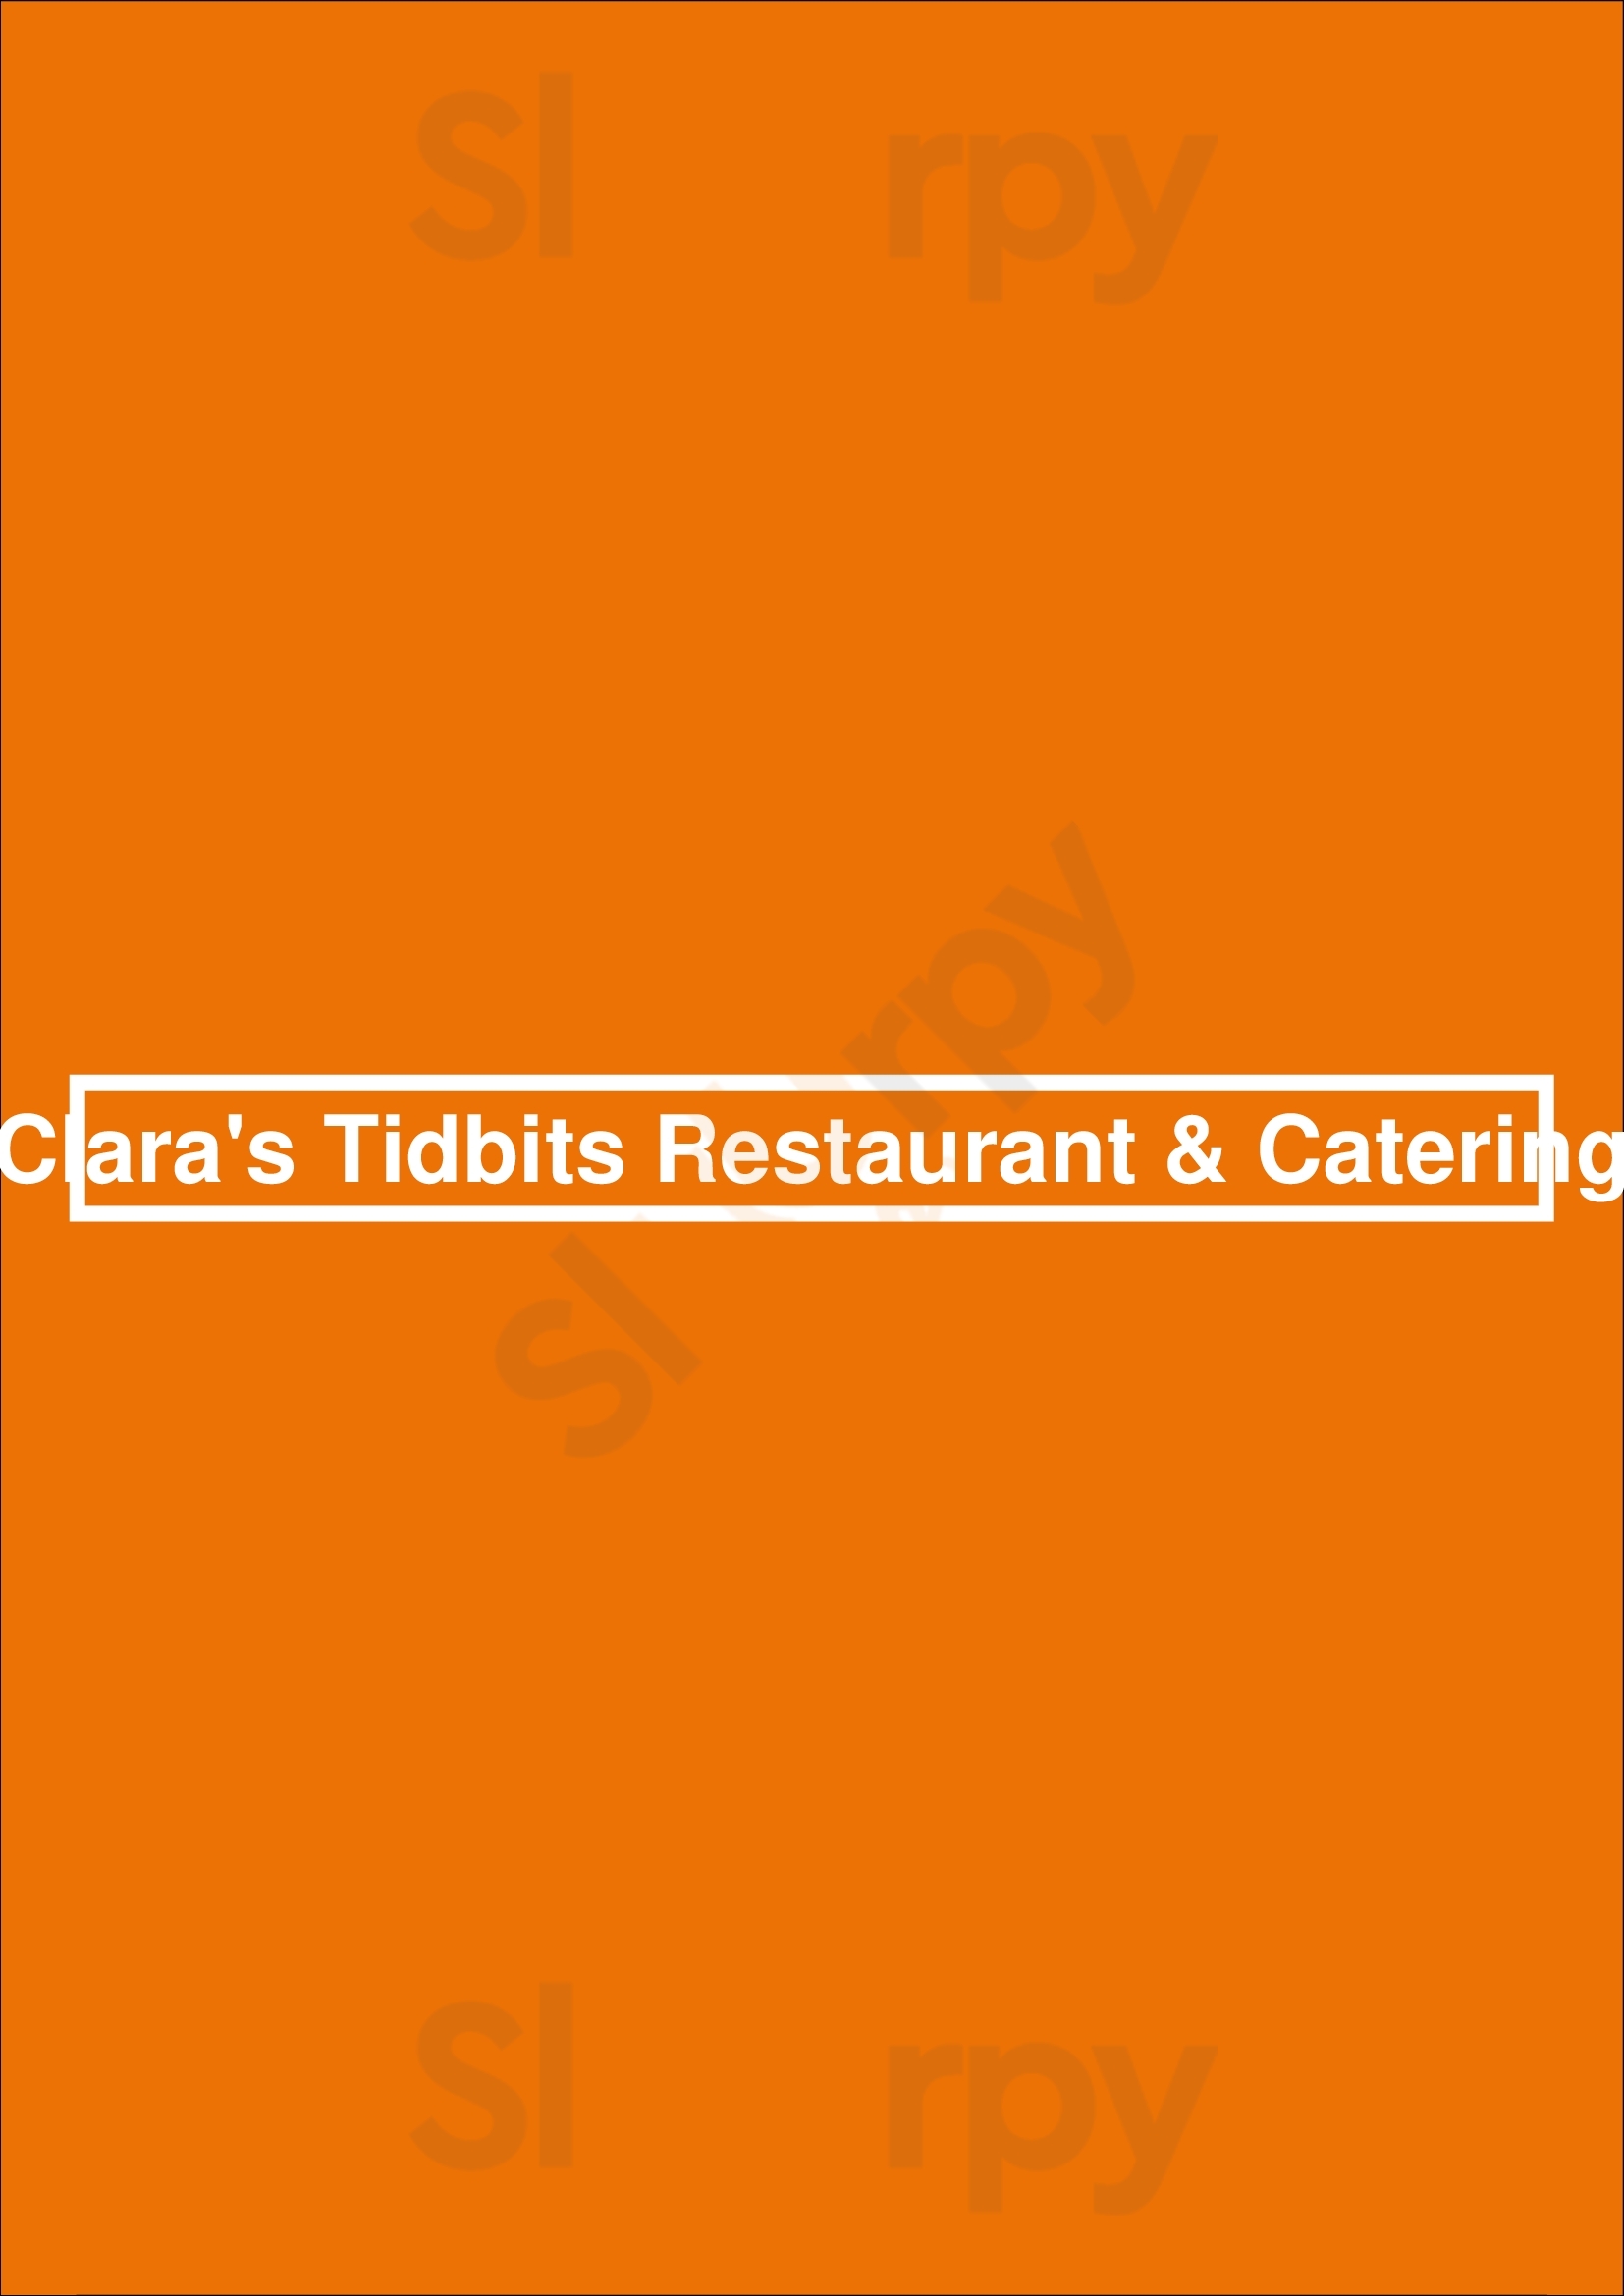 Clara's Tidbits Restaurant & Catering Jacksonville Menu - 1